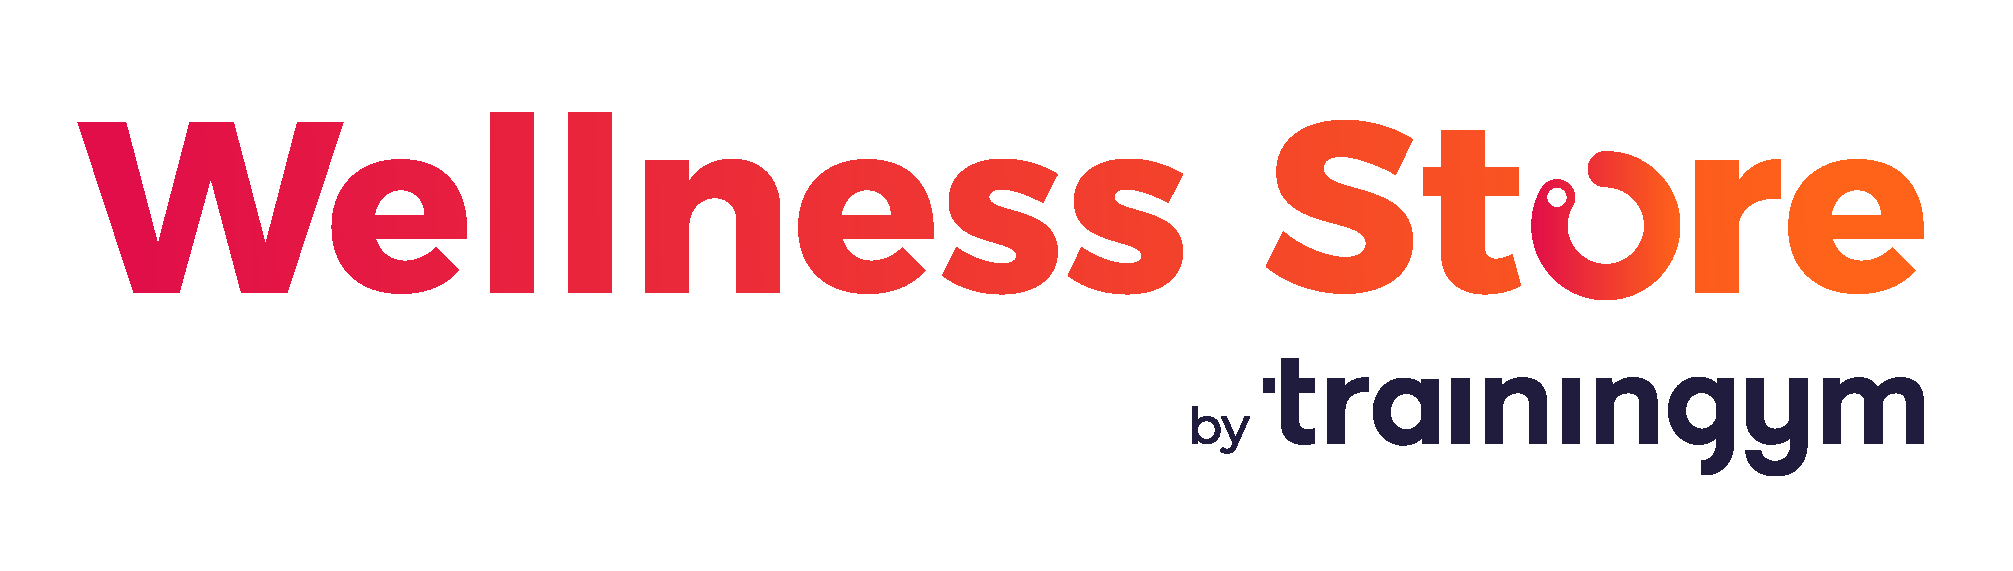 logo-wellness-store_02 copia-1